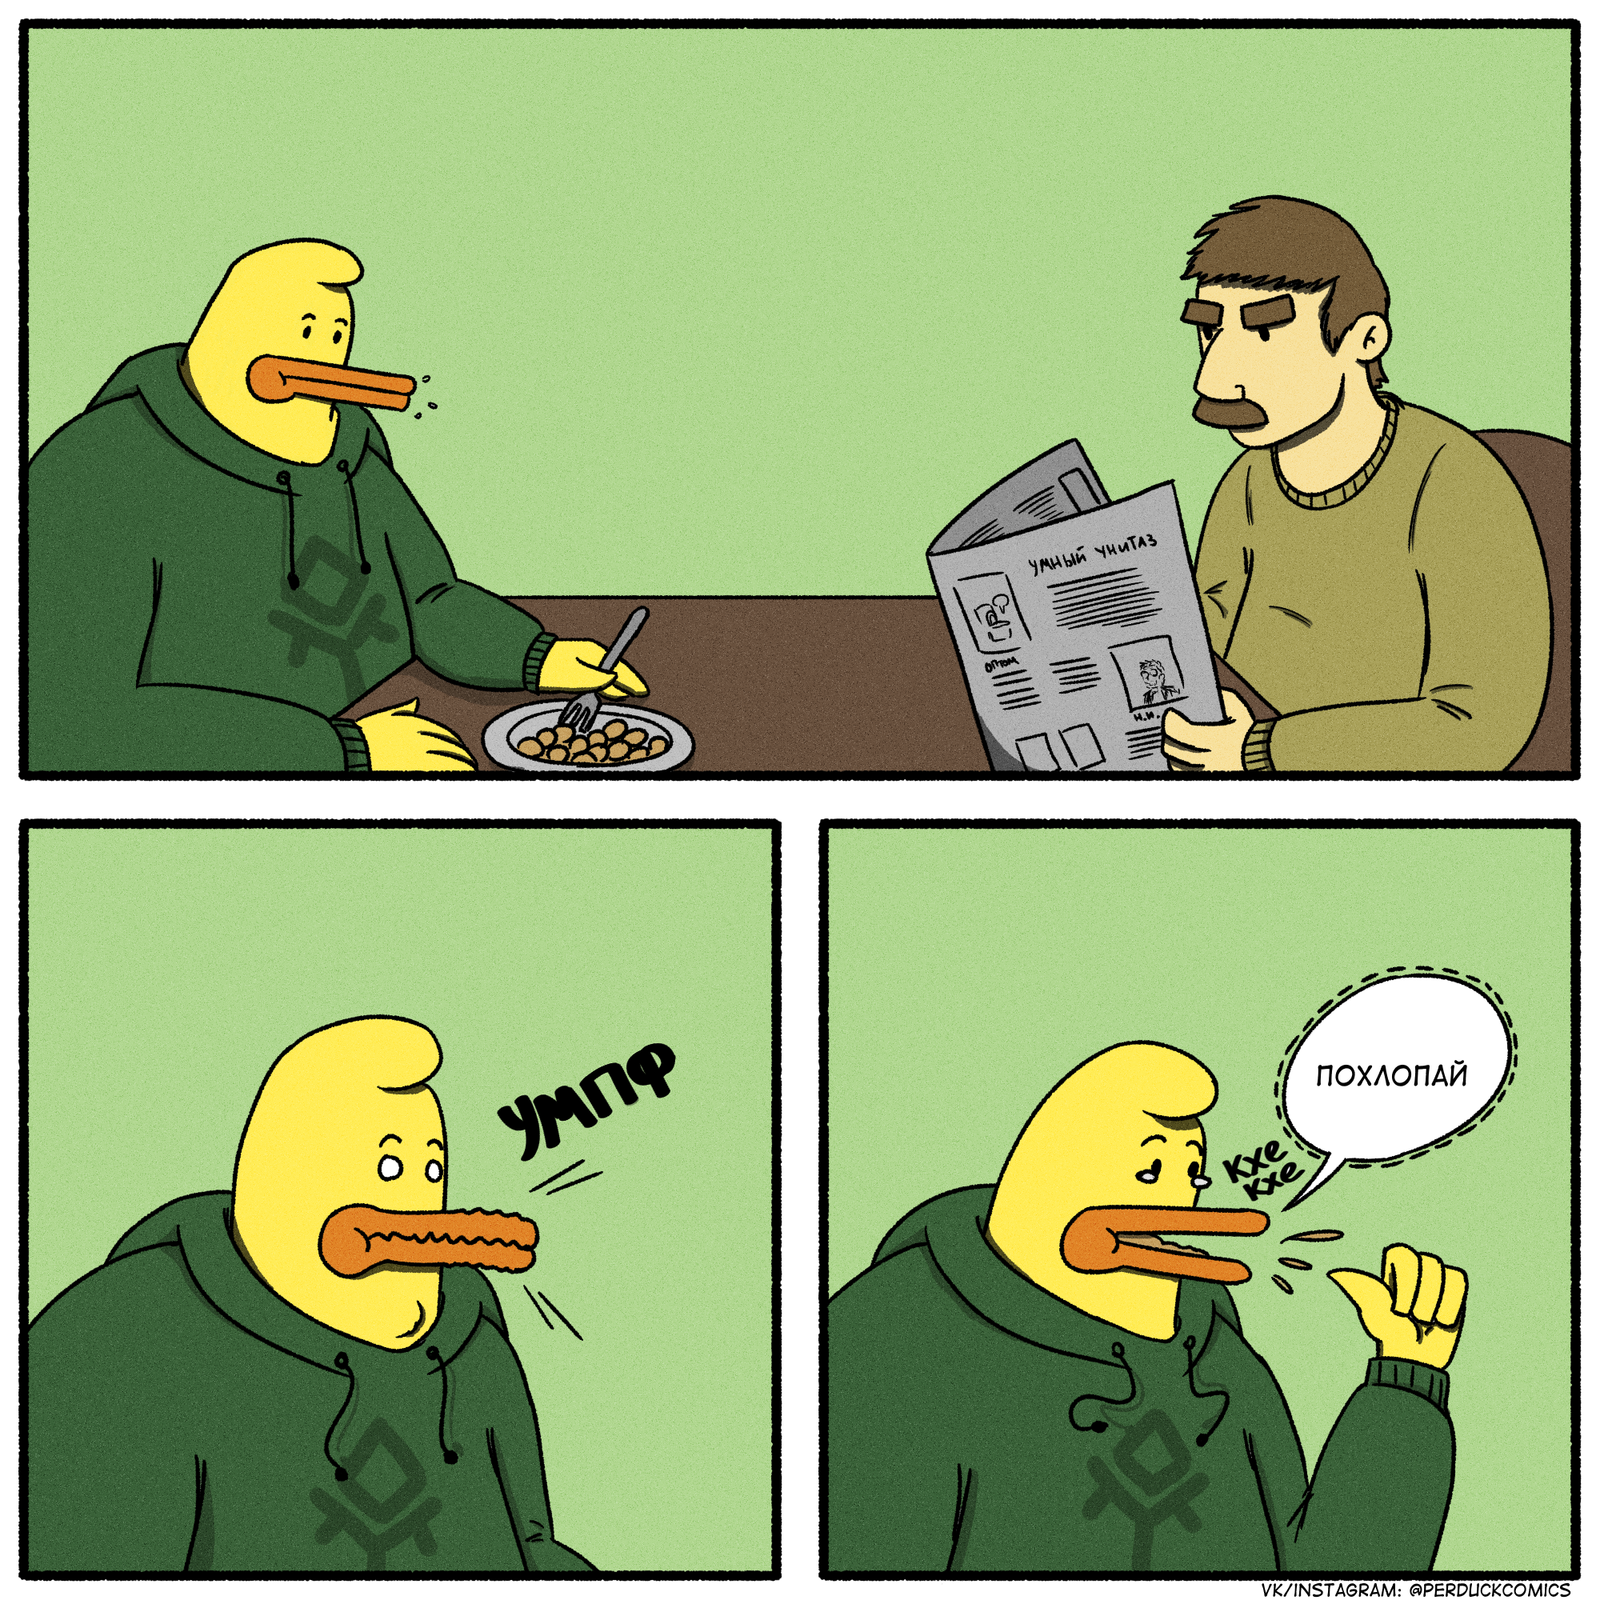 clap - My, Web comic, Humor, Duck, Dad, Longpost